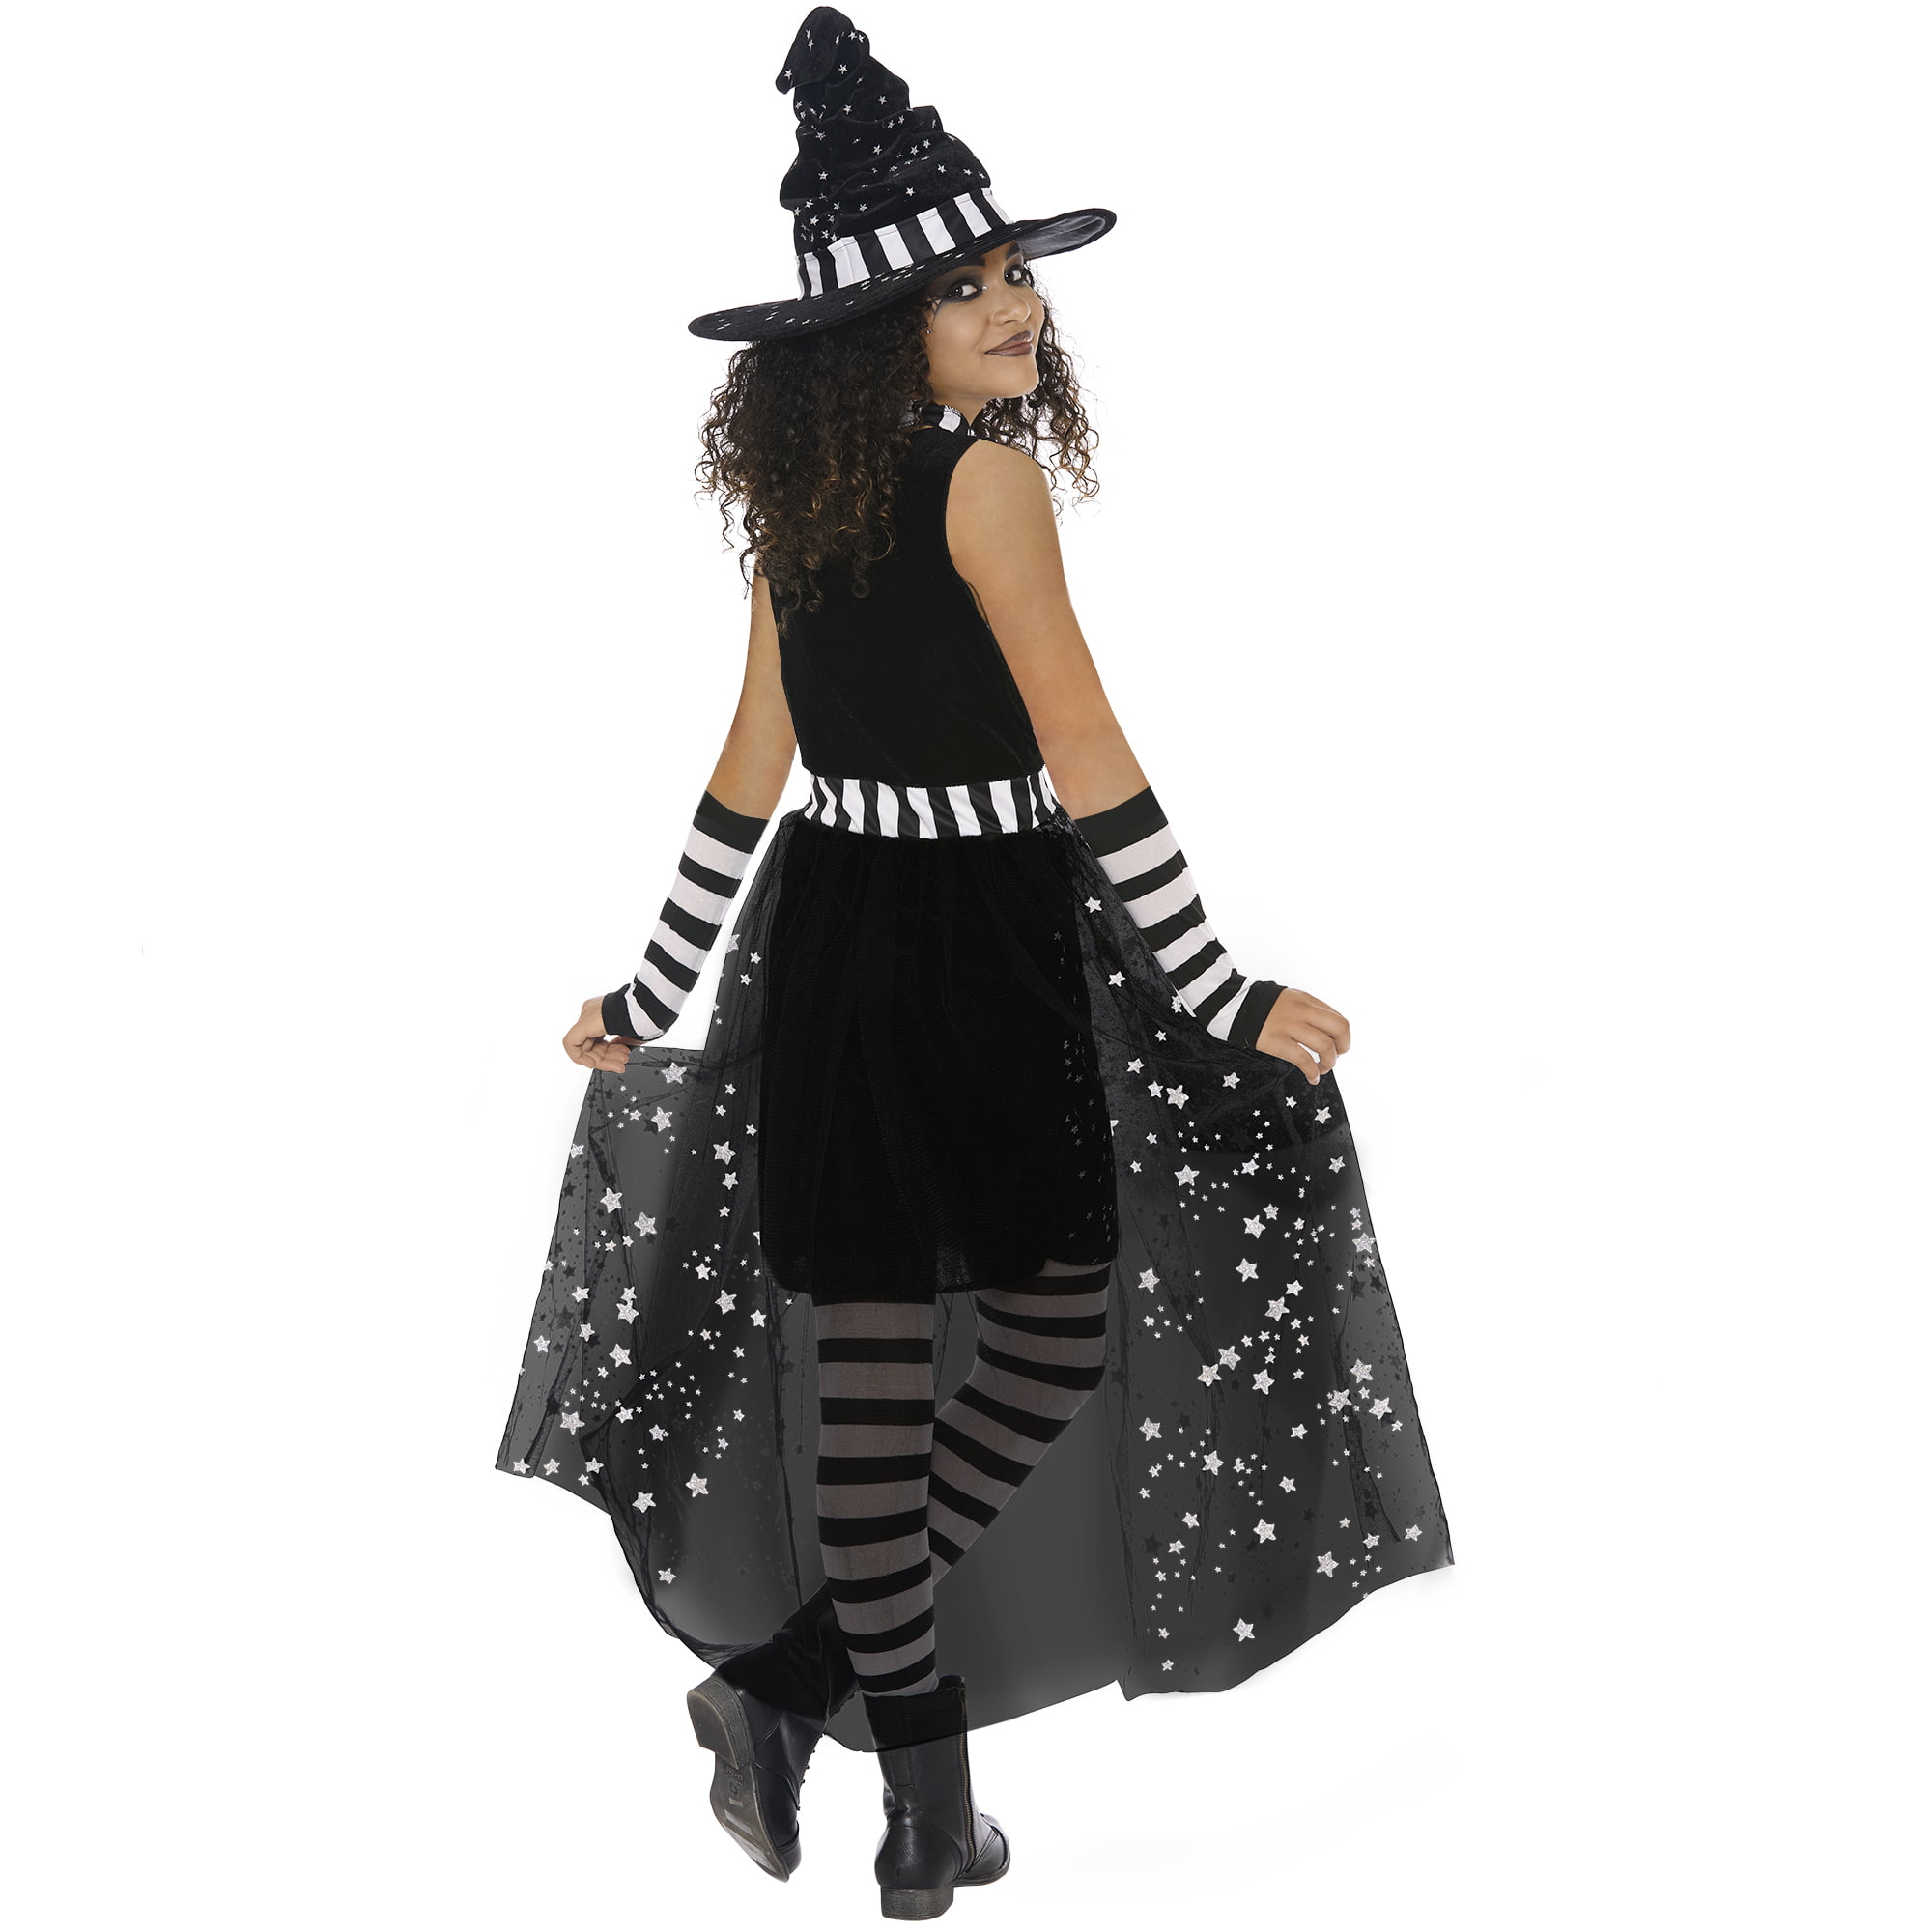 28 DIY Witch Costume Ideas For Halloween | POPSUGAR Smart Living